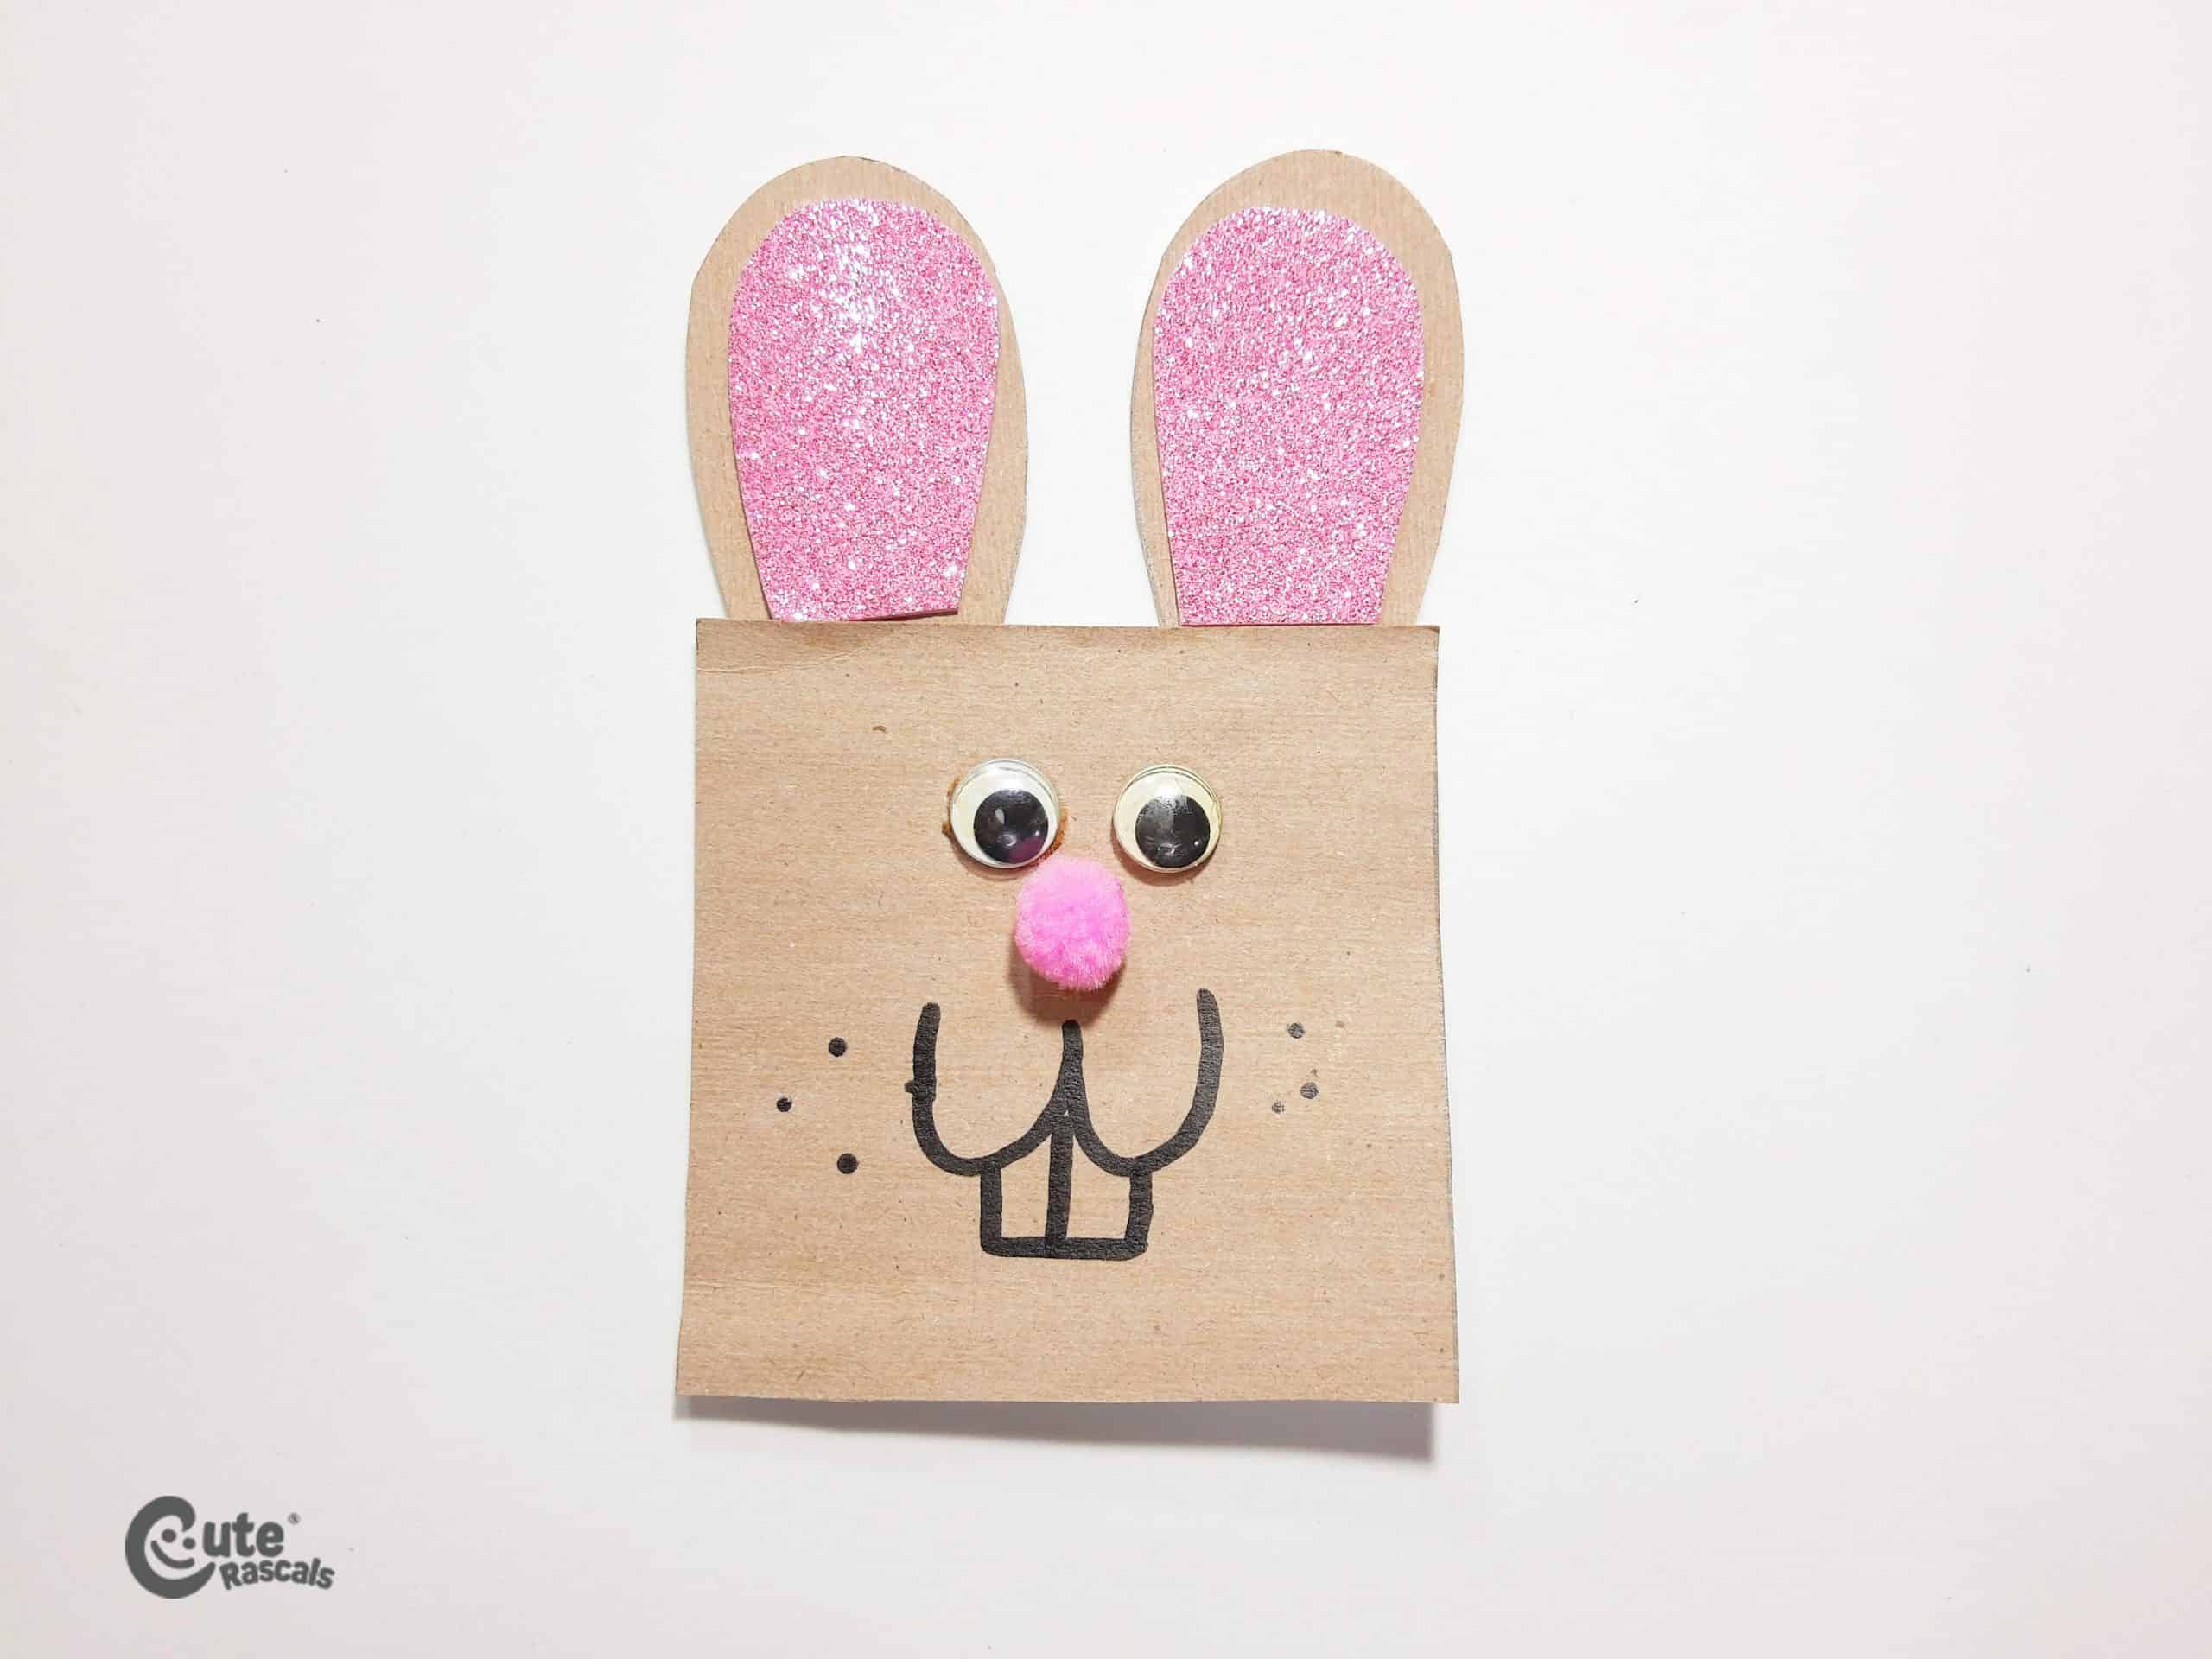 Easter bunny crafts for kids. A simple paper bag rabbit handcraft